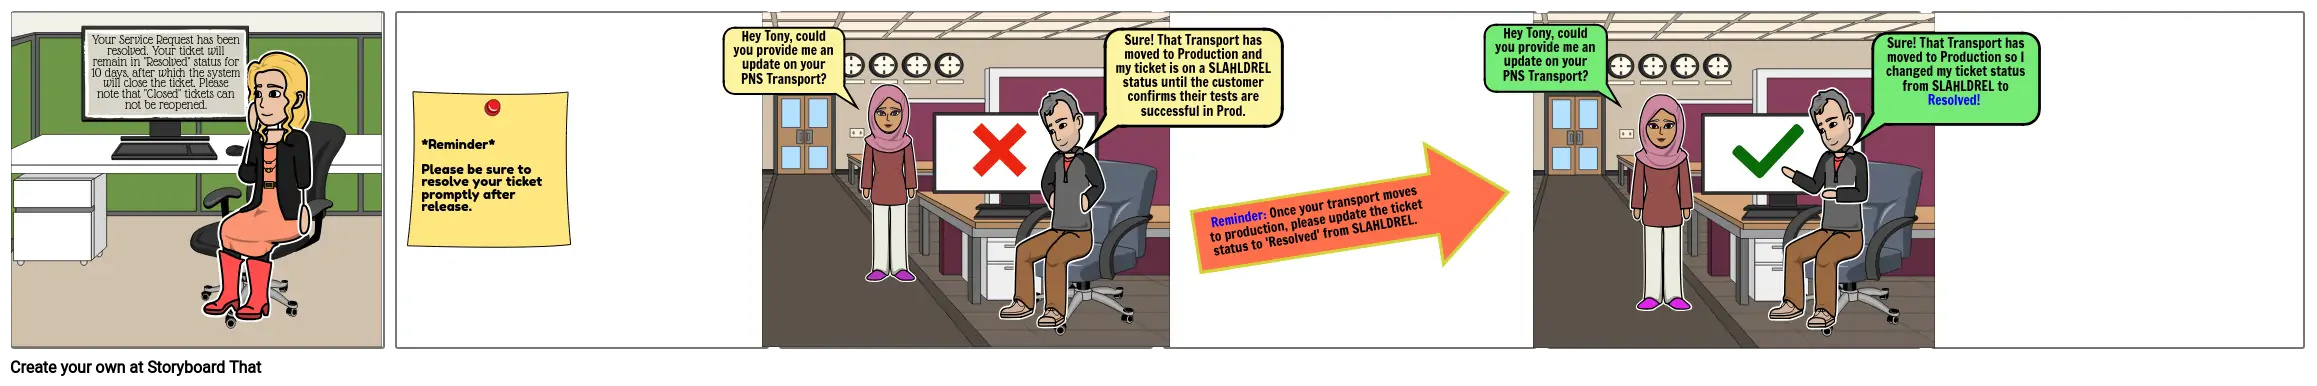 Transport Tickets - SLAHLDREL to Resolved